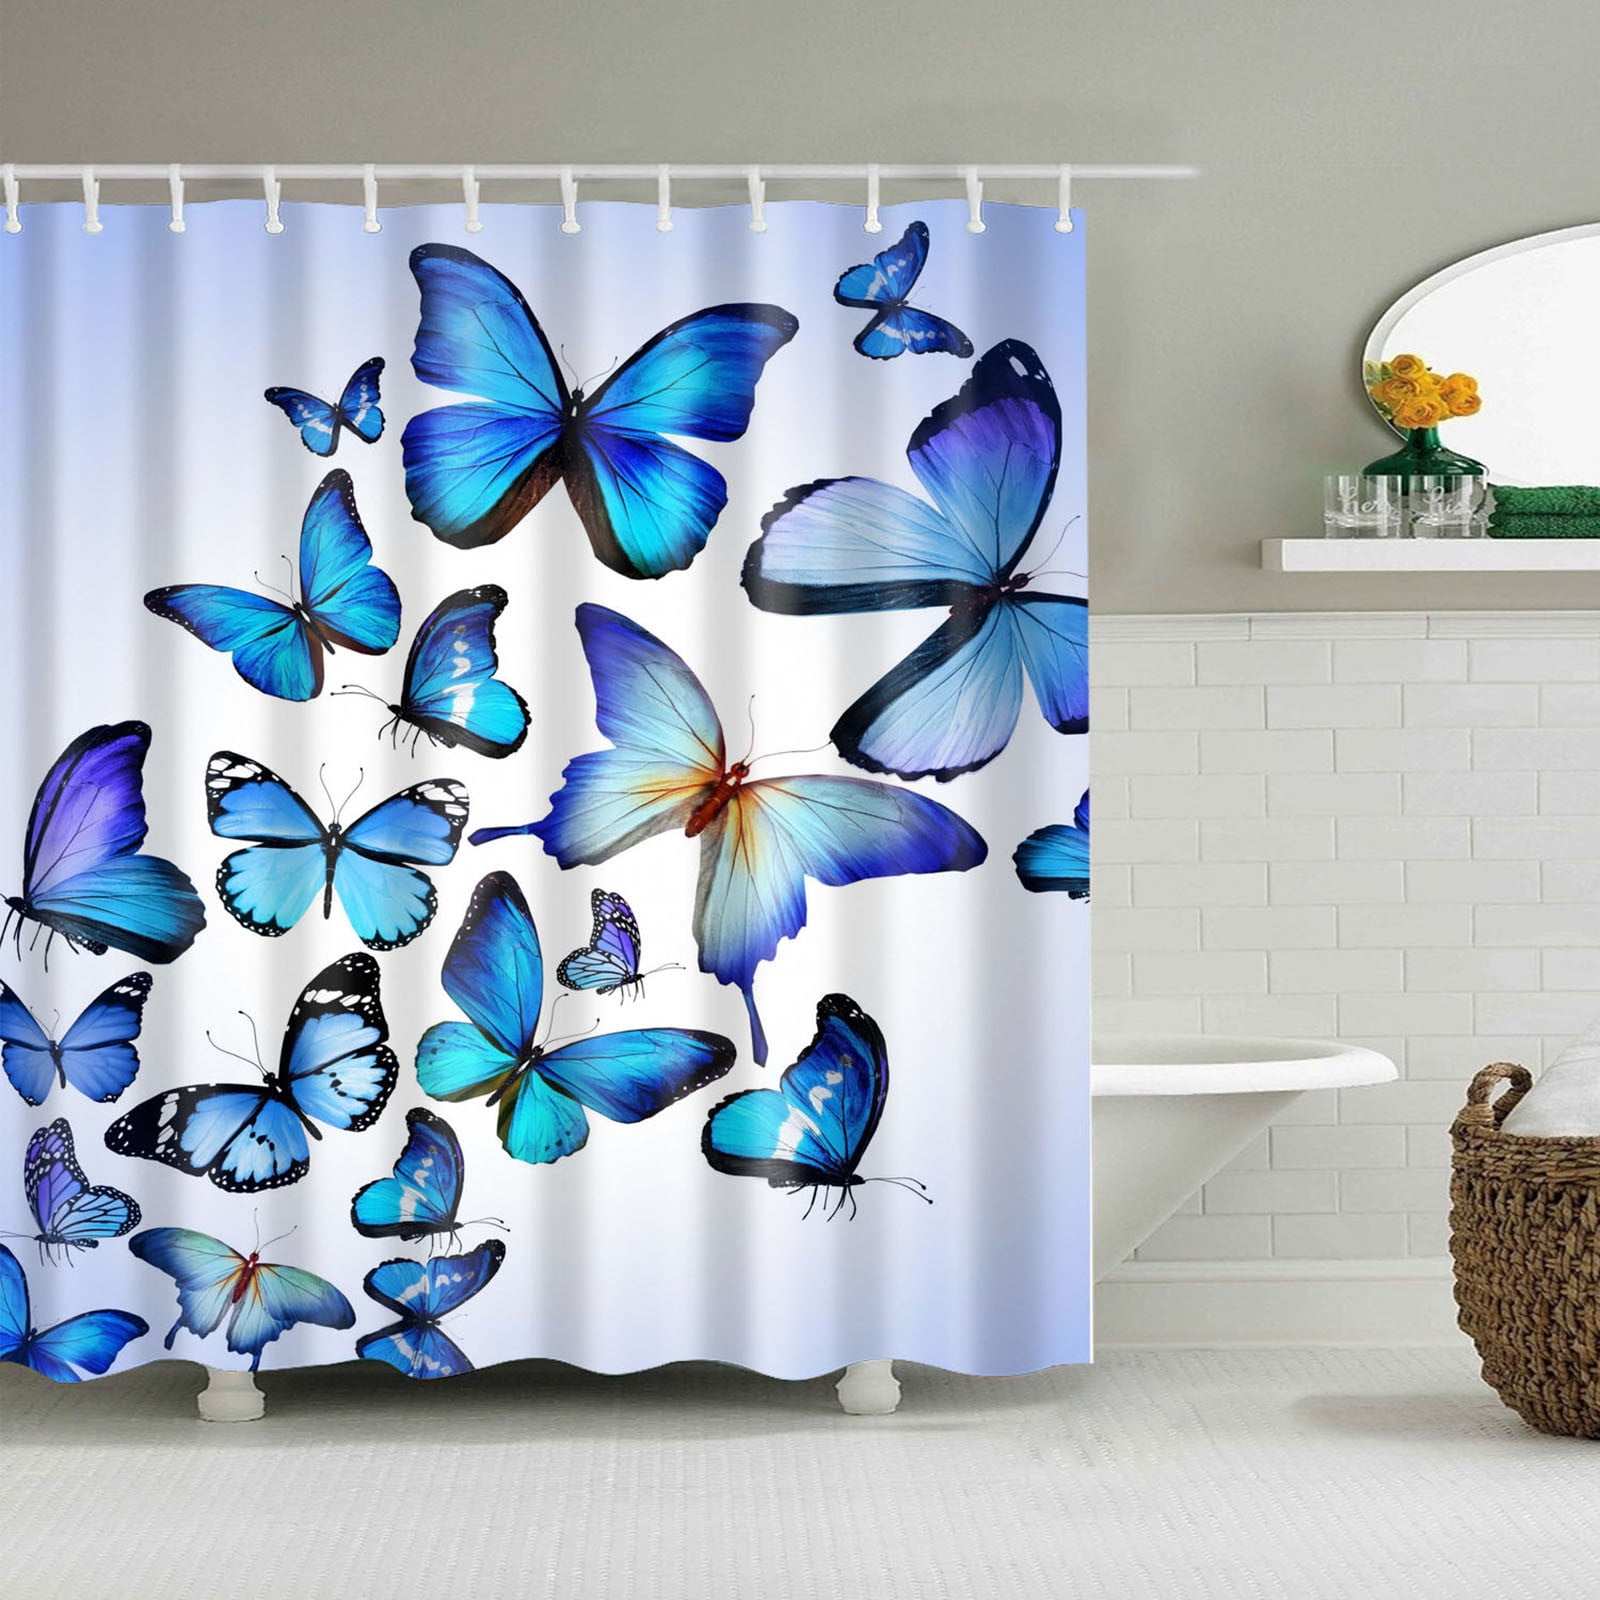 Clearance! EQWLJWE Butterfly Shower Curtain Royal Blue Butterflies Home ...